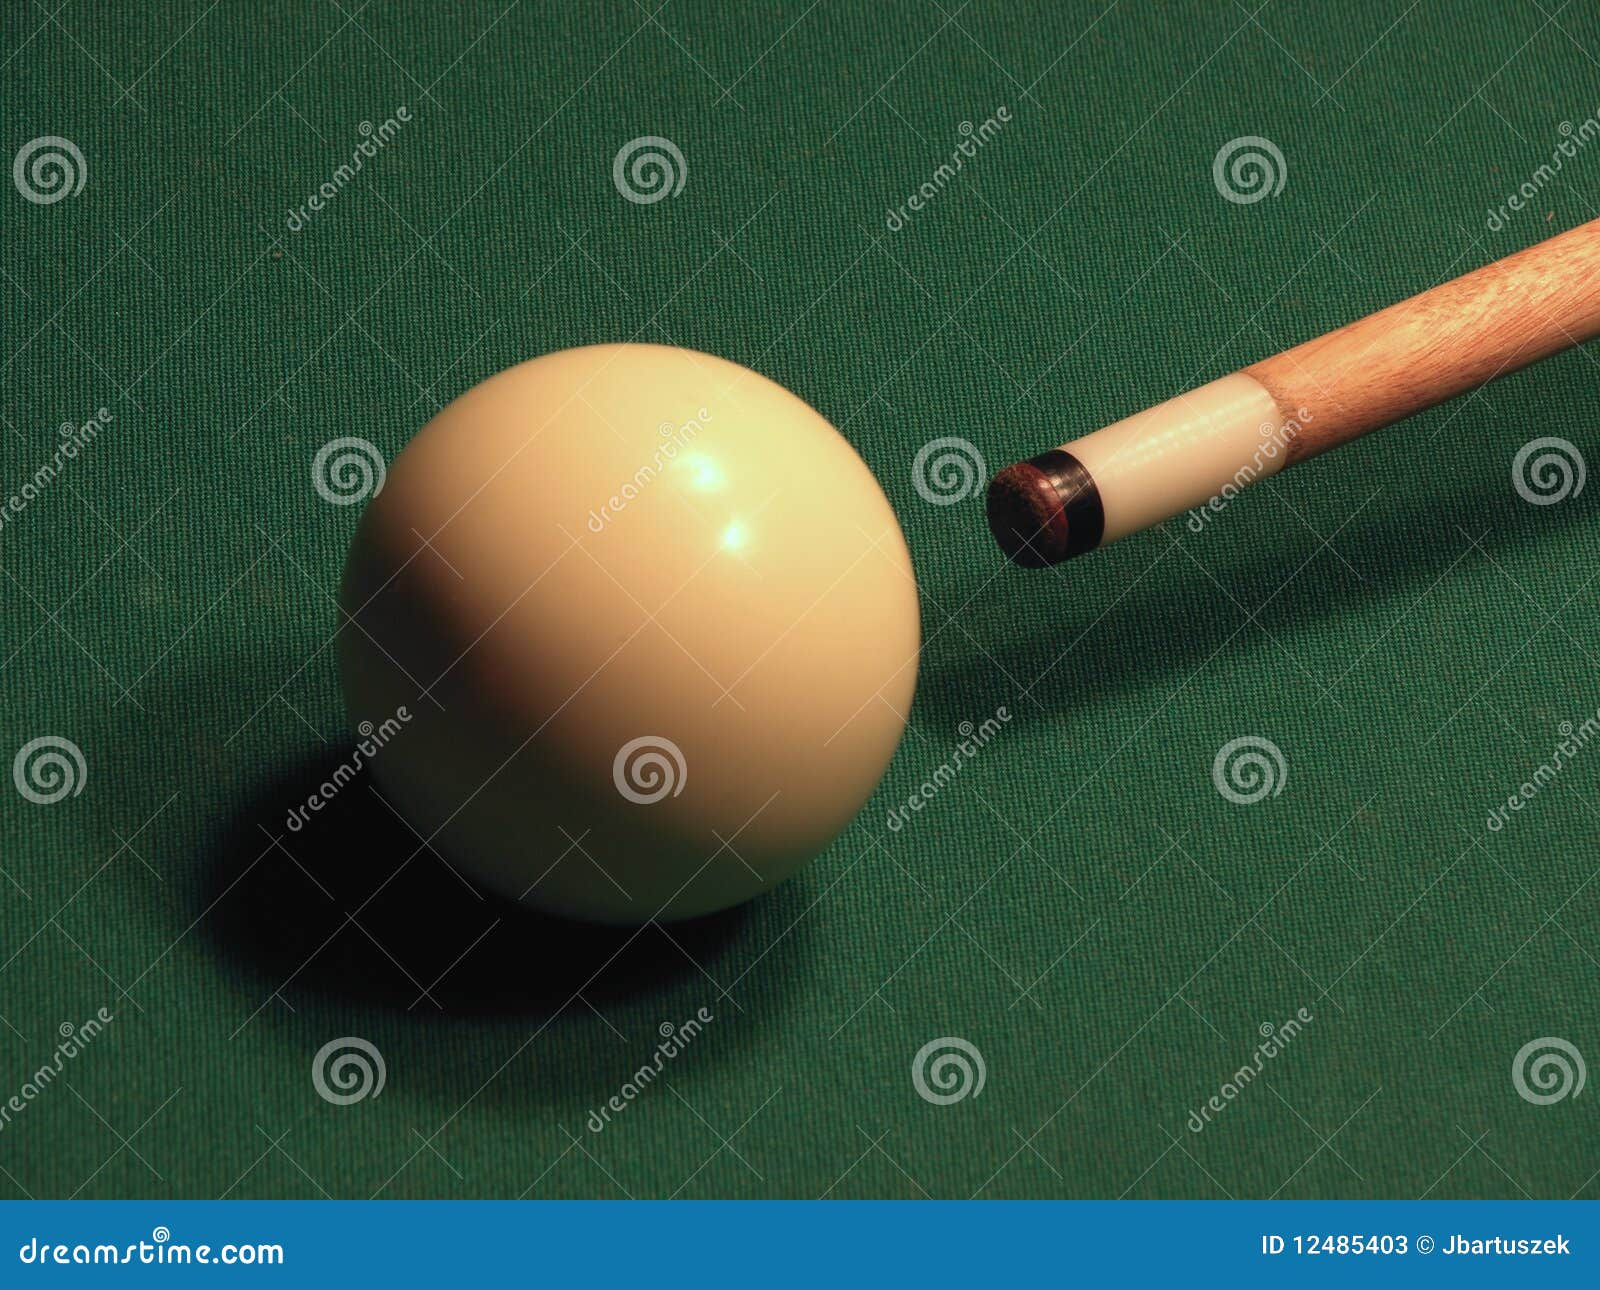 Billiards, Ball, Billiard Table, A Stick Stock Image - Image of competition, billiards: 12485403